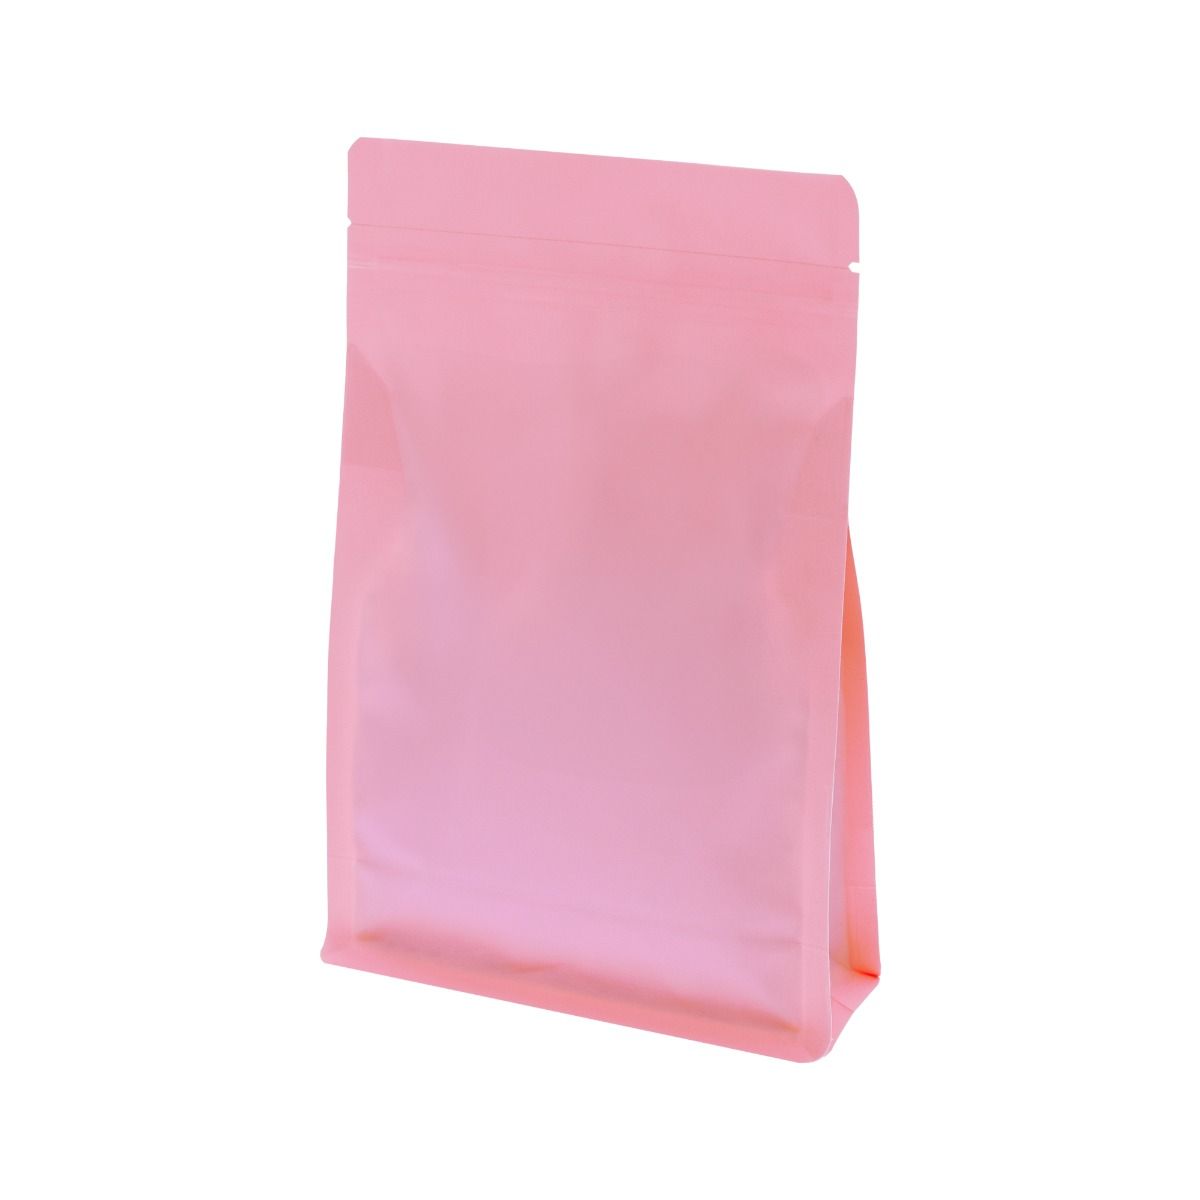 Flat bottom pouch with zipper - matt pink (100% recyclable)